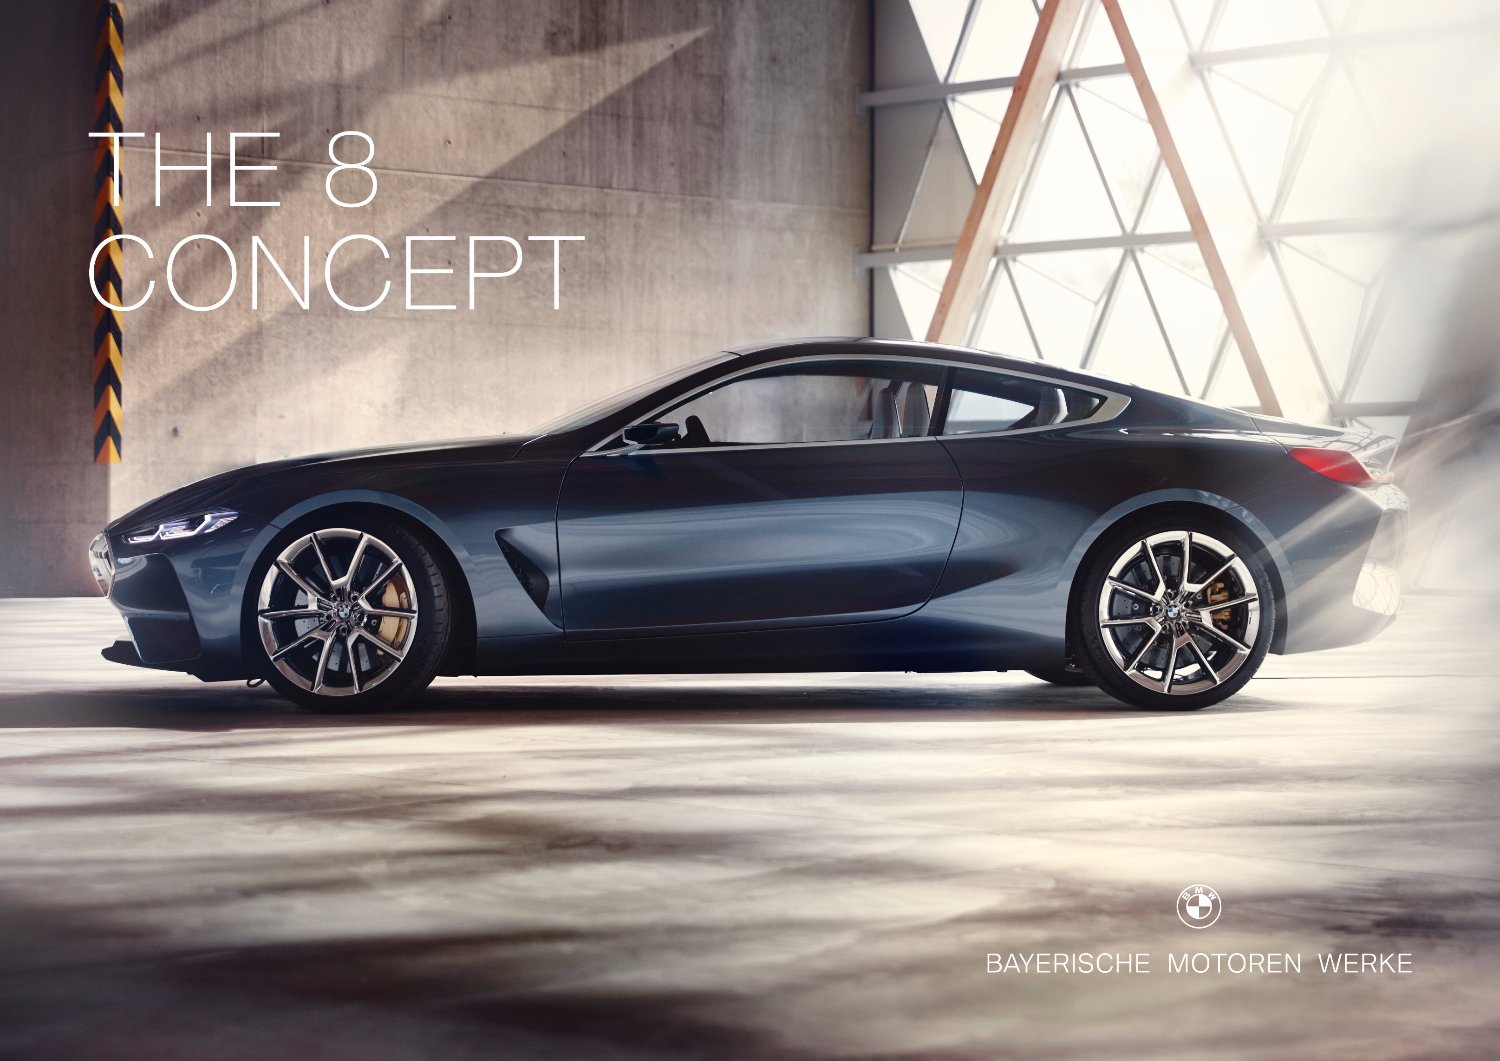 Beyond driving pleasure: innovative luxury, BMW-style